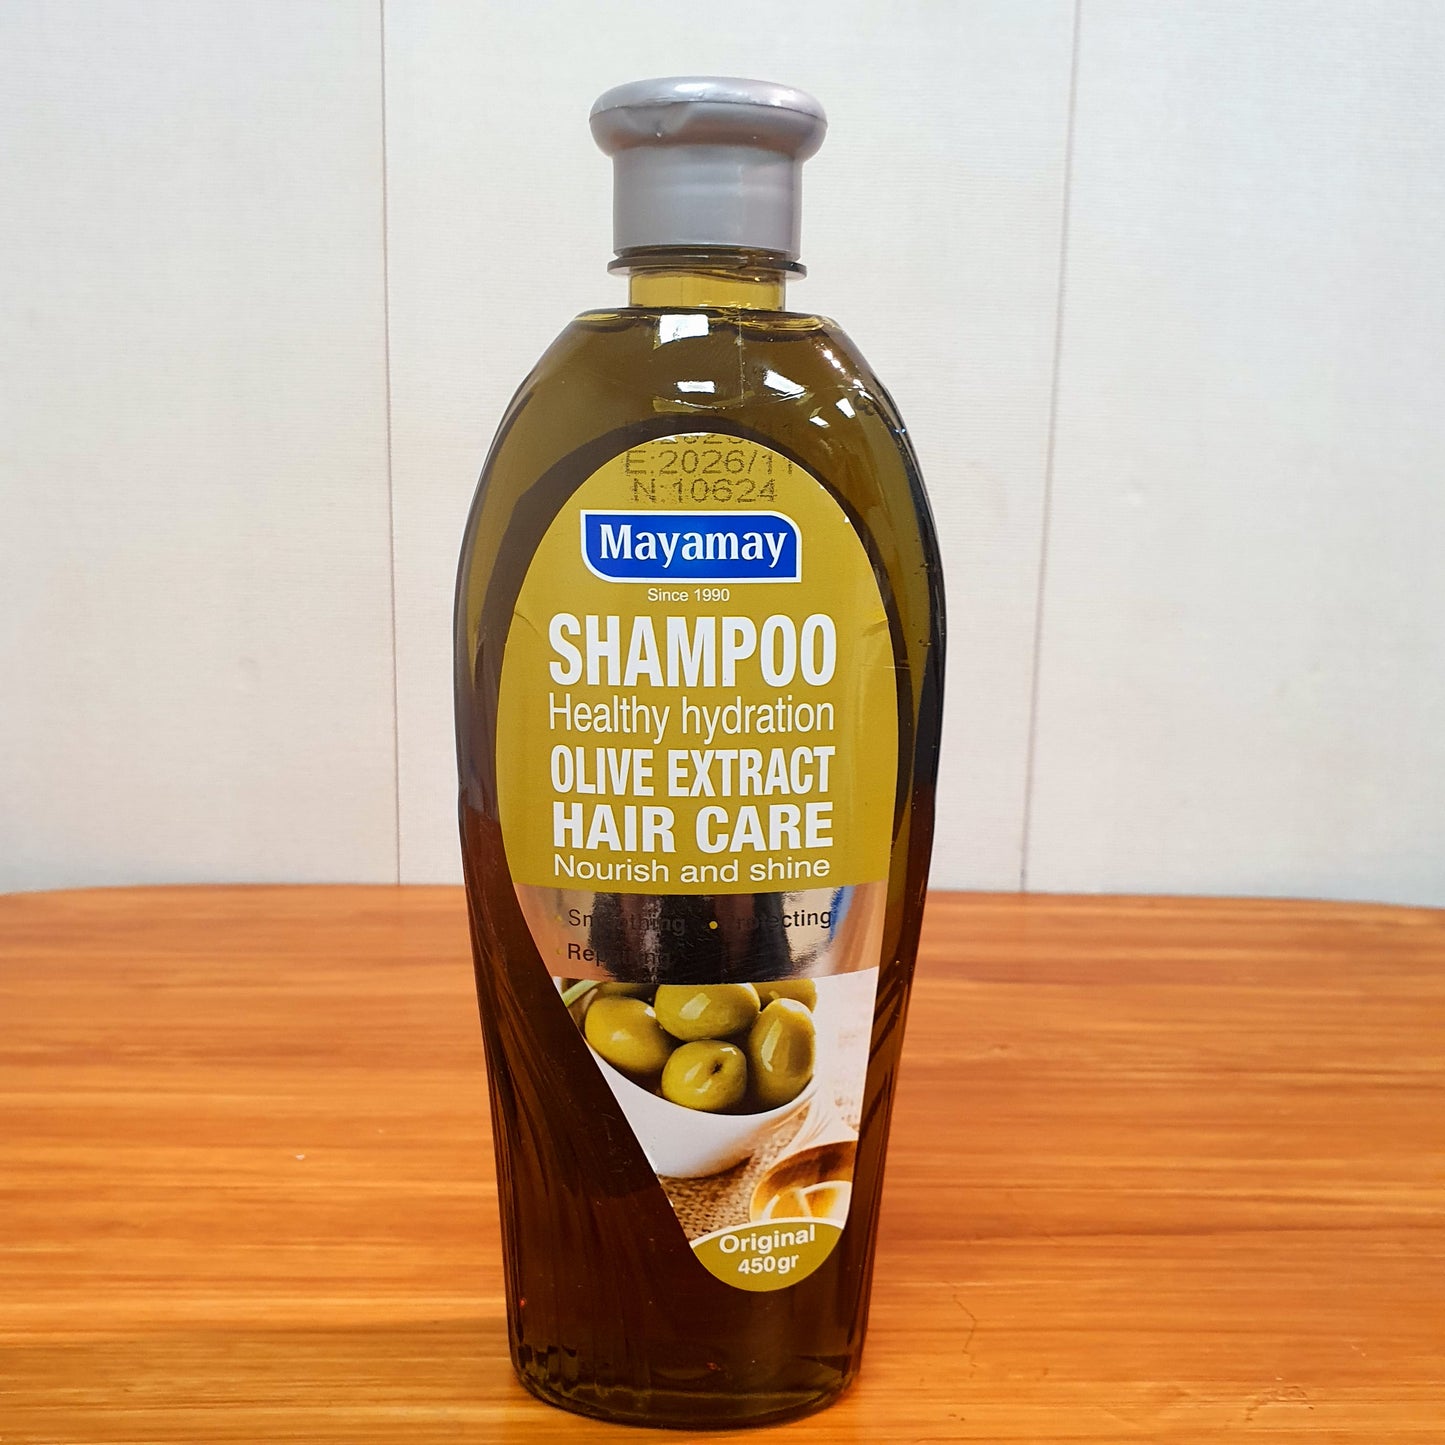 mayamay olive extract hair care shampoo   450 ml